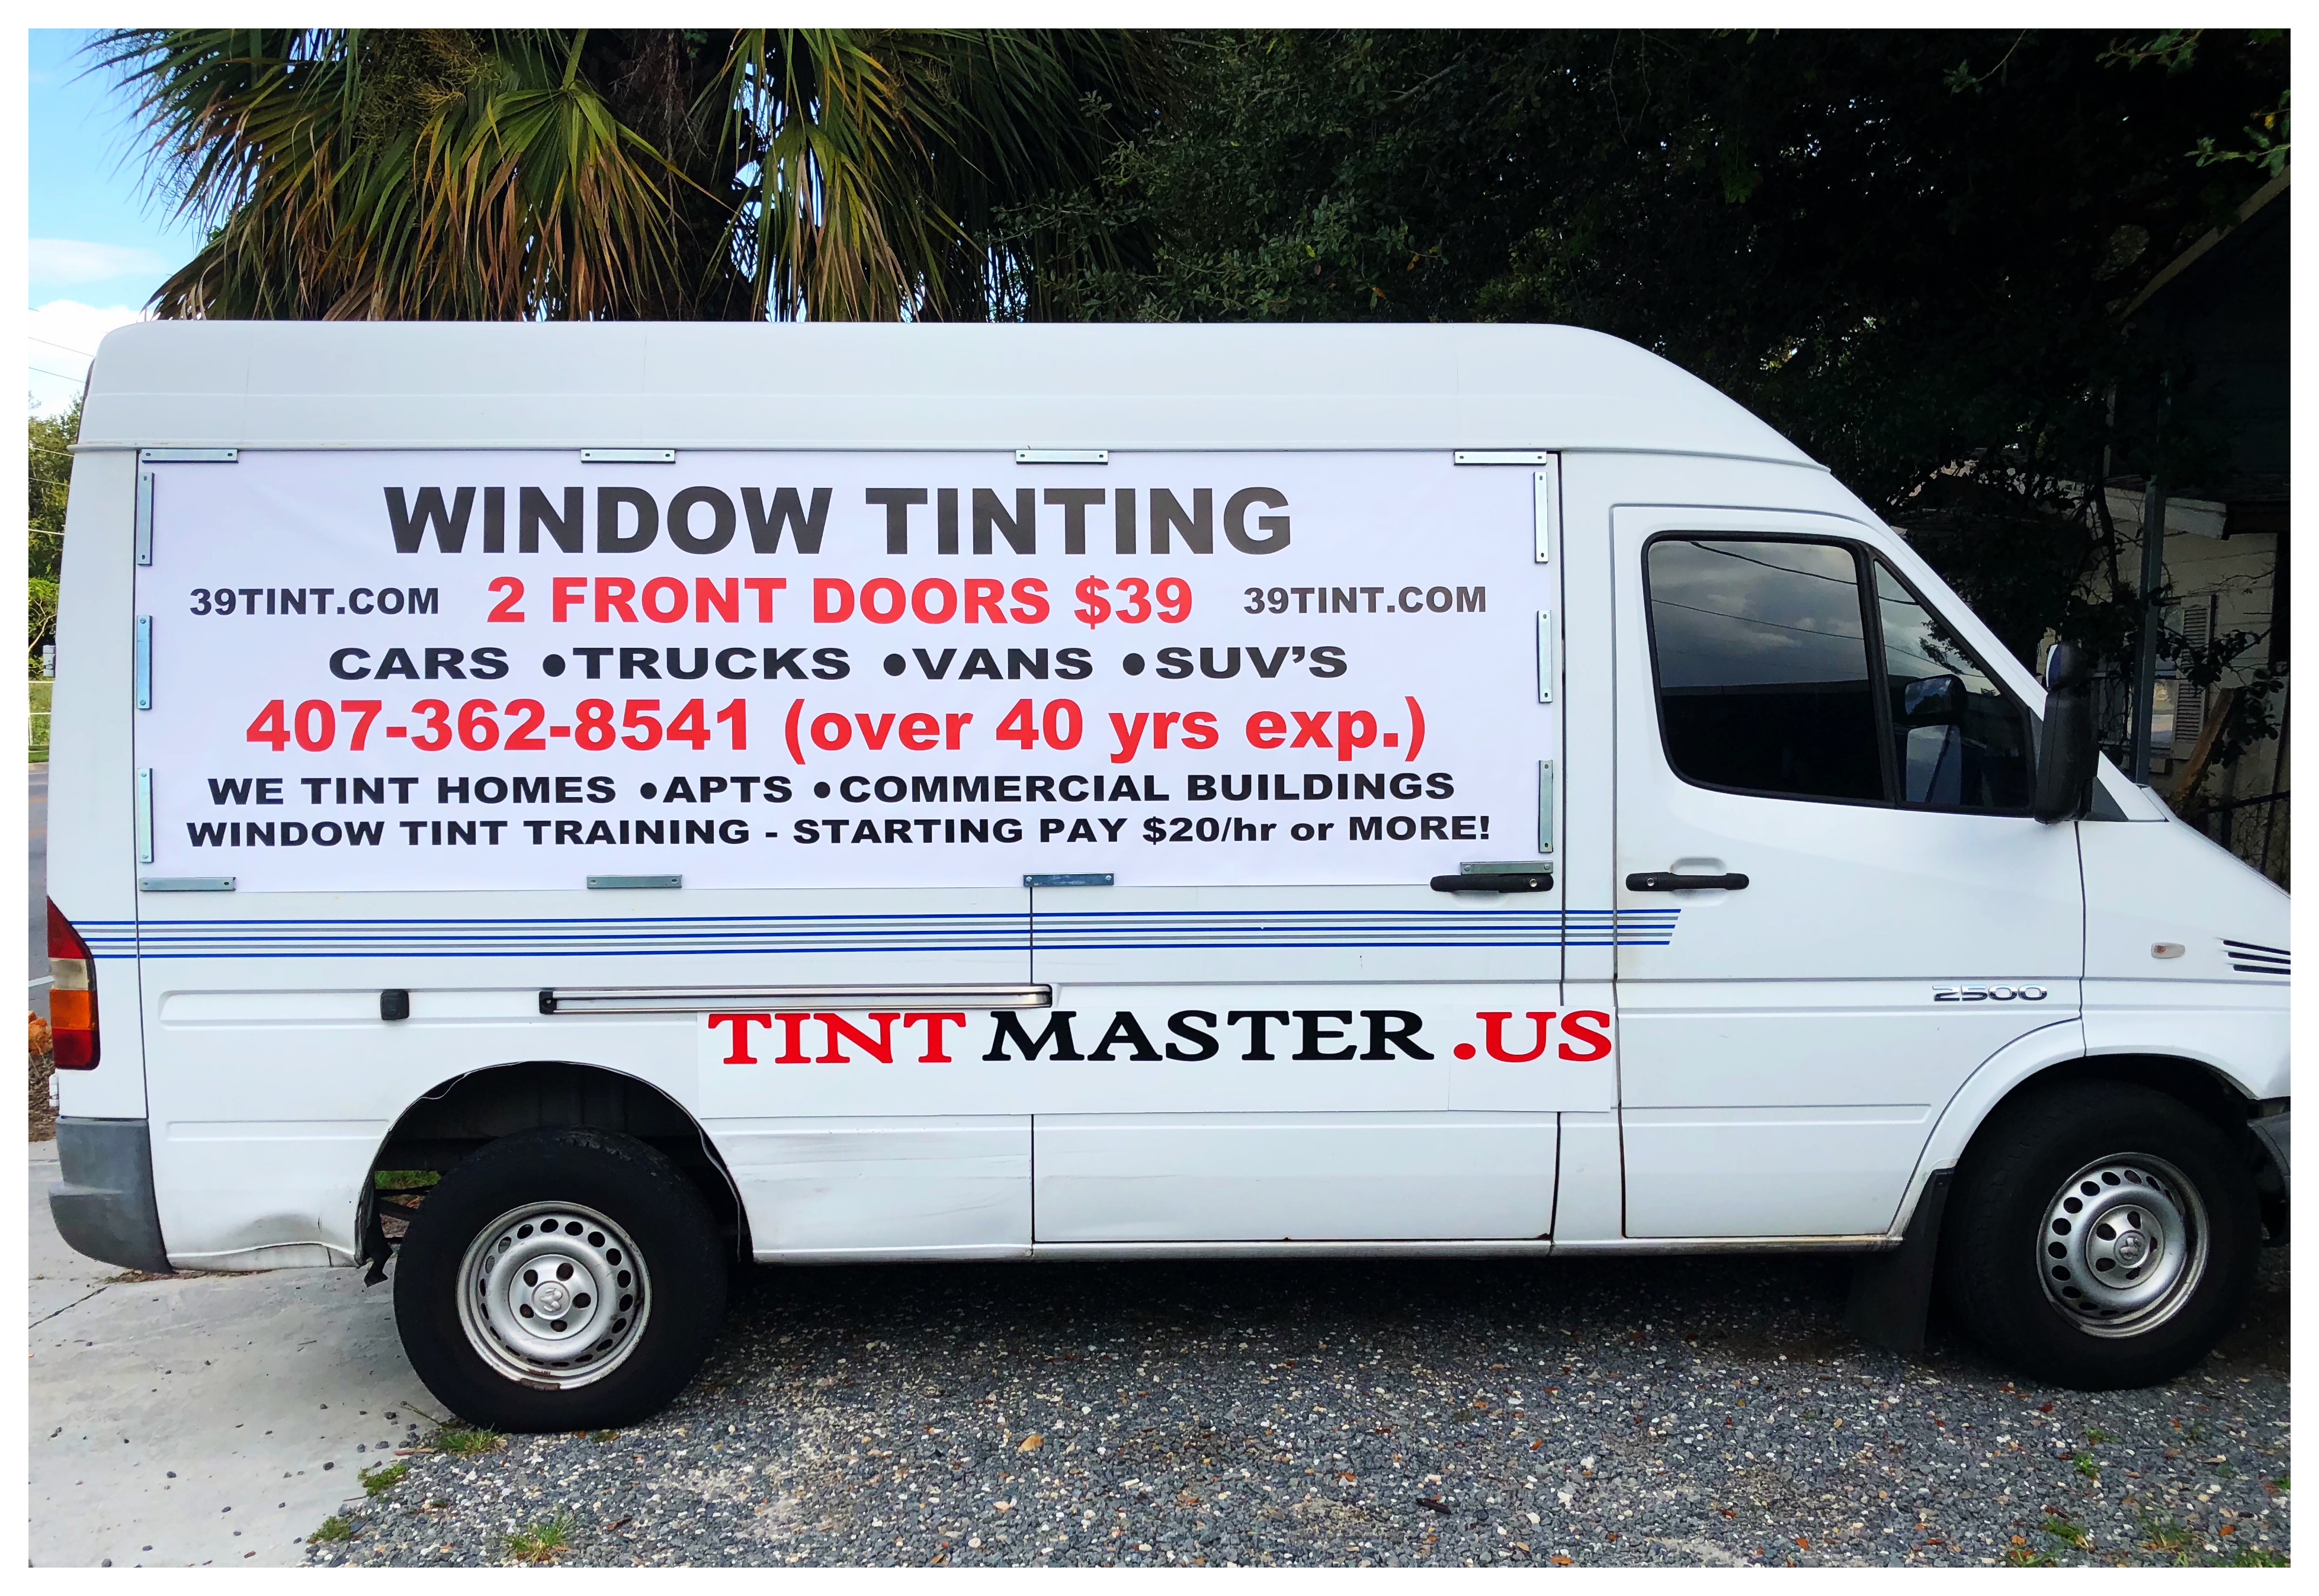 Tint Master Window Tinting Logo